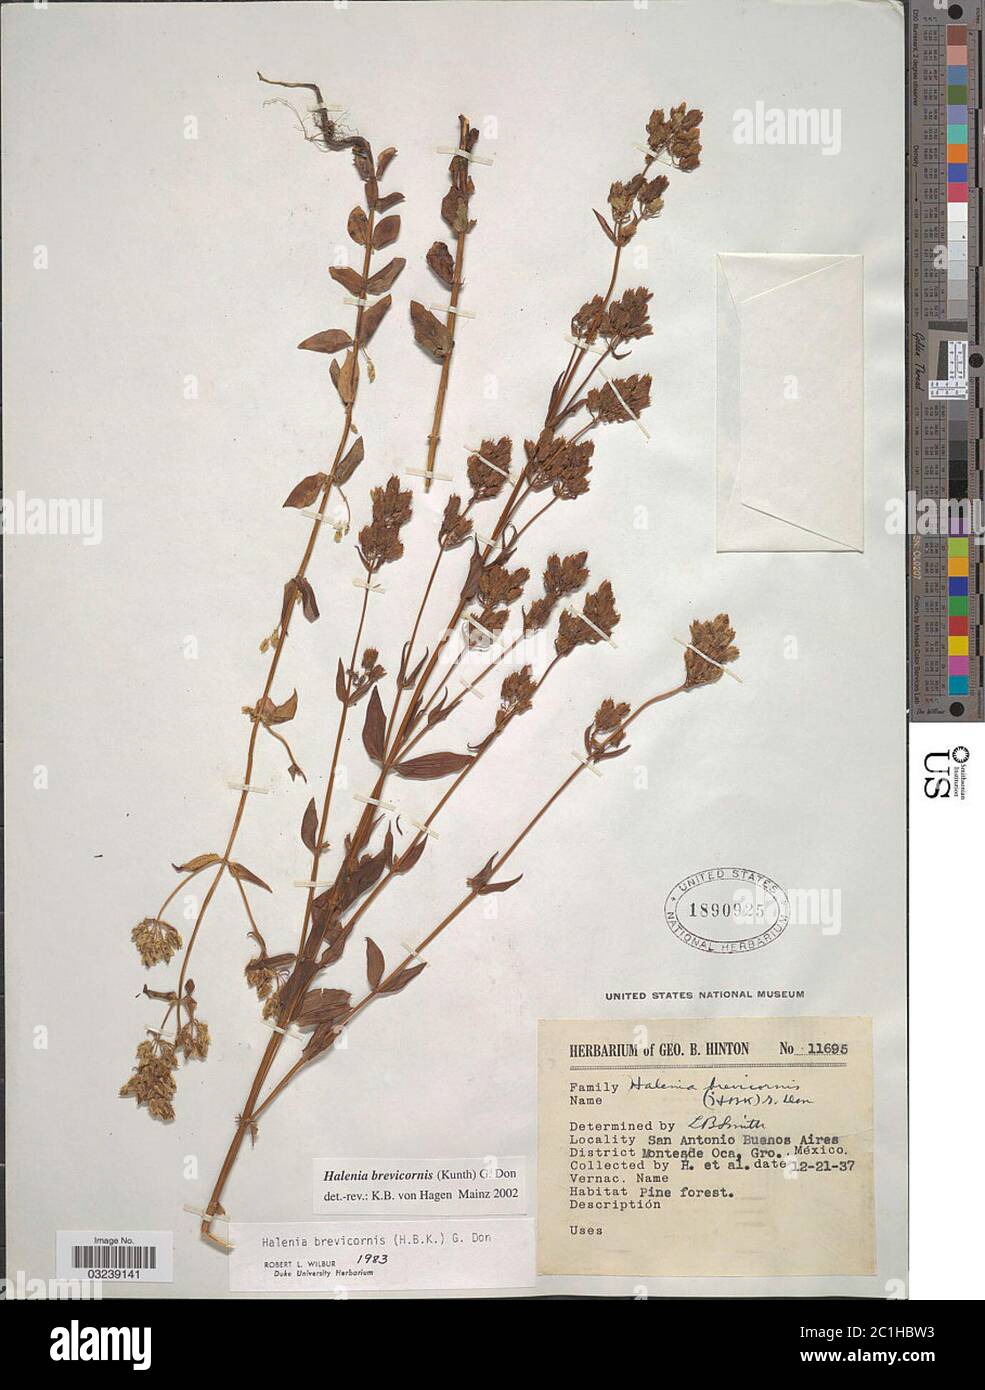 Halenia brevicornis Kunth G Don Halenia brevicornis Kunth G Don. Stock Photo